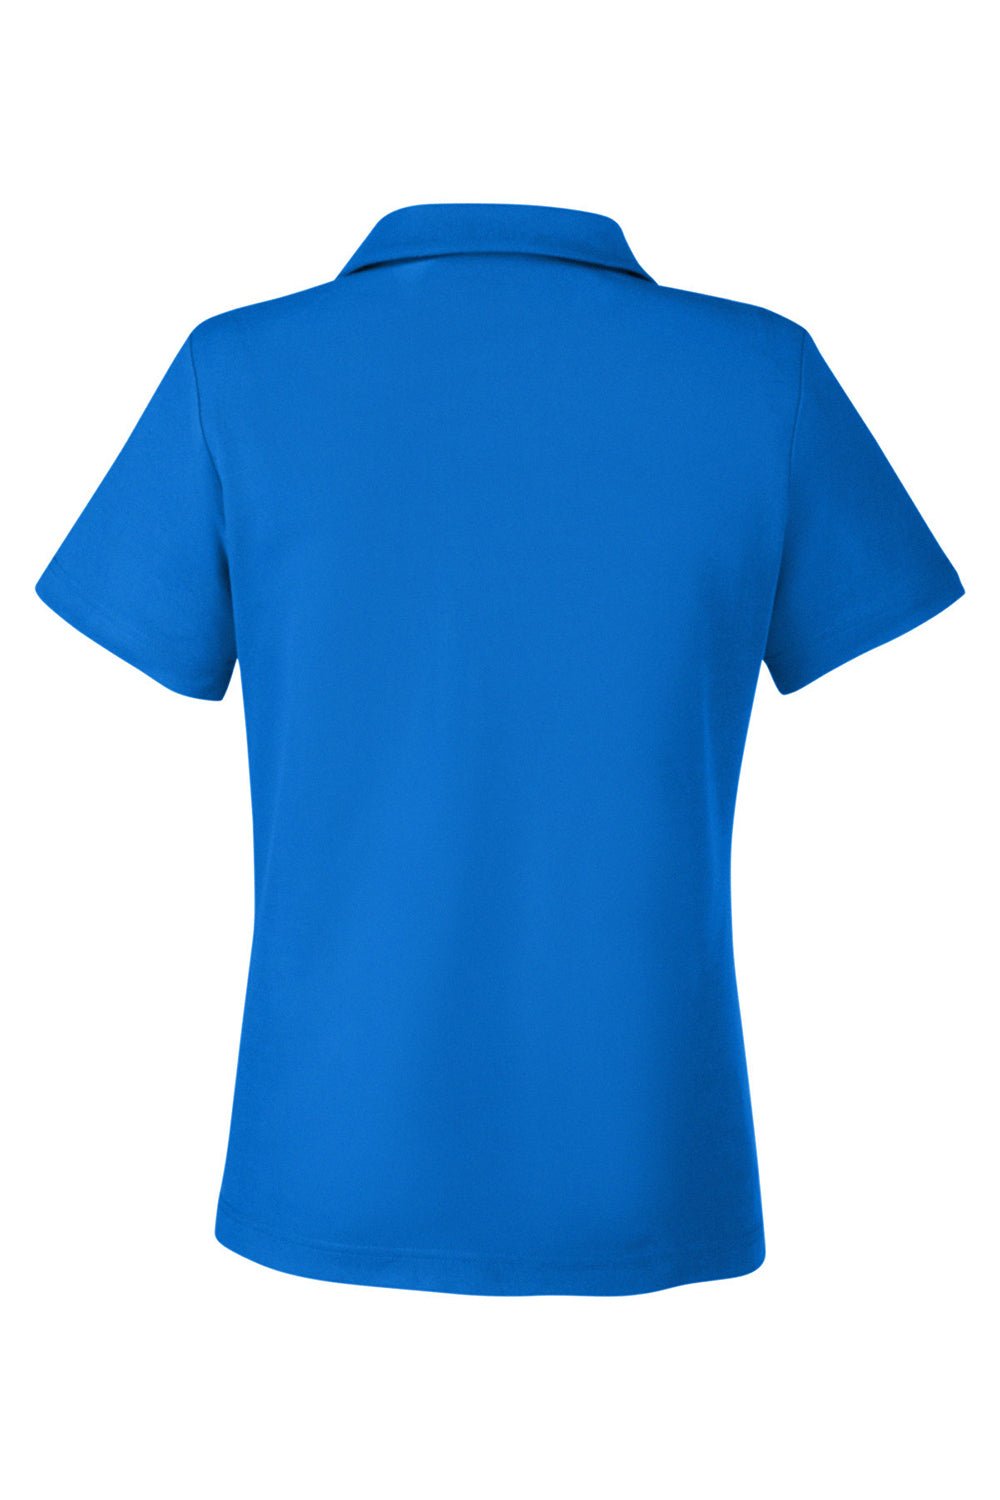 Core 365 CE112W Womens Fusion ChromaSoft Performance Moisture Wicking Pique Short Sleeve Polo Shirt True Royal Blue Flat Back